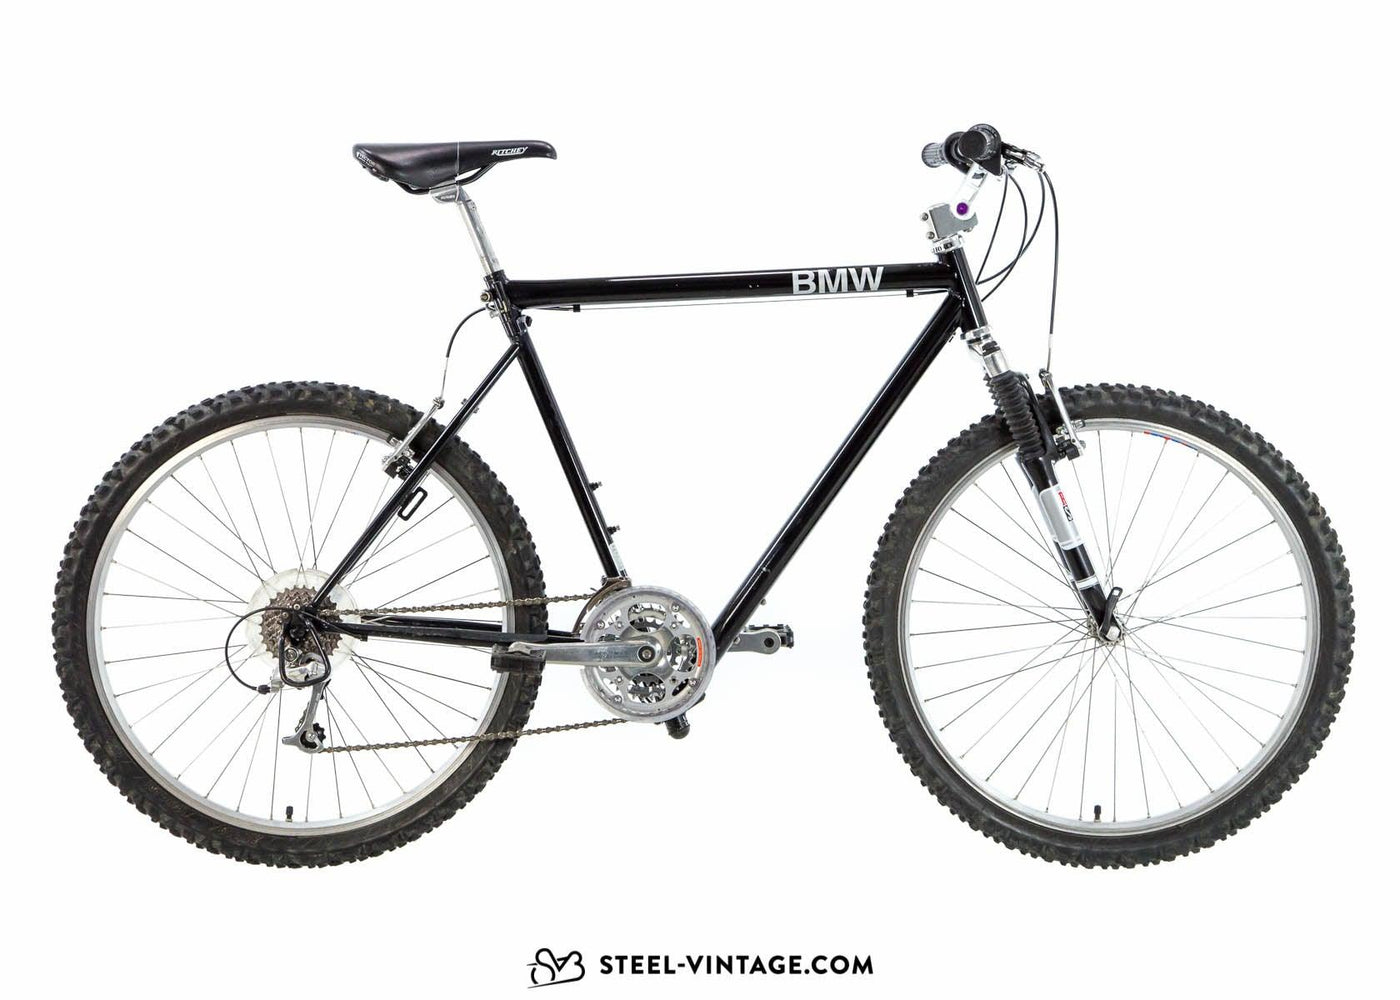 BMW Foldable MTB Bike 1990s - Steel Vintage Bikes